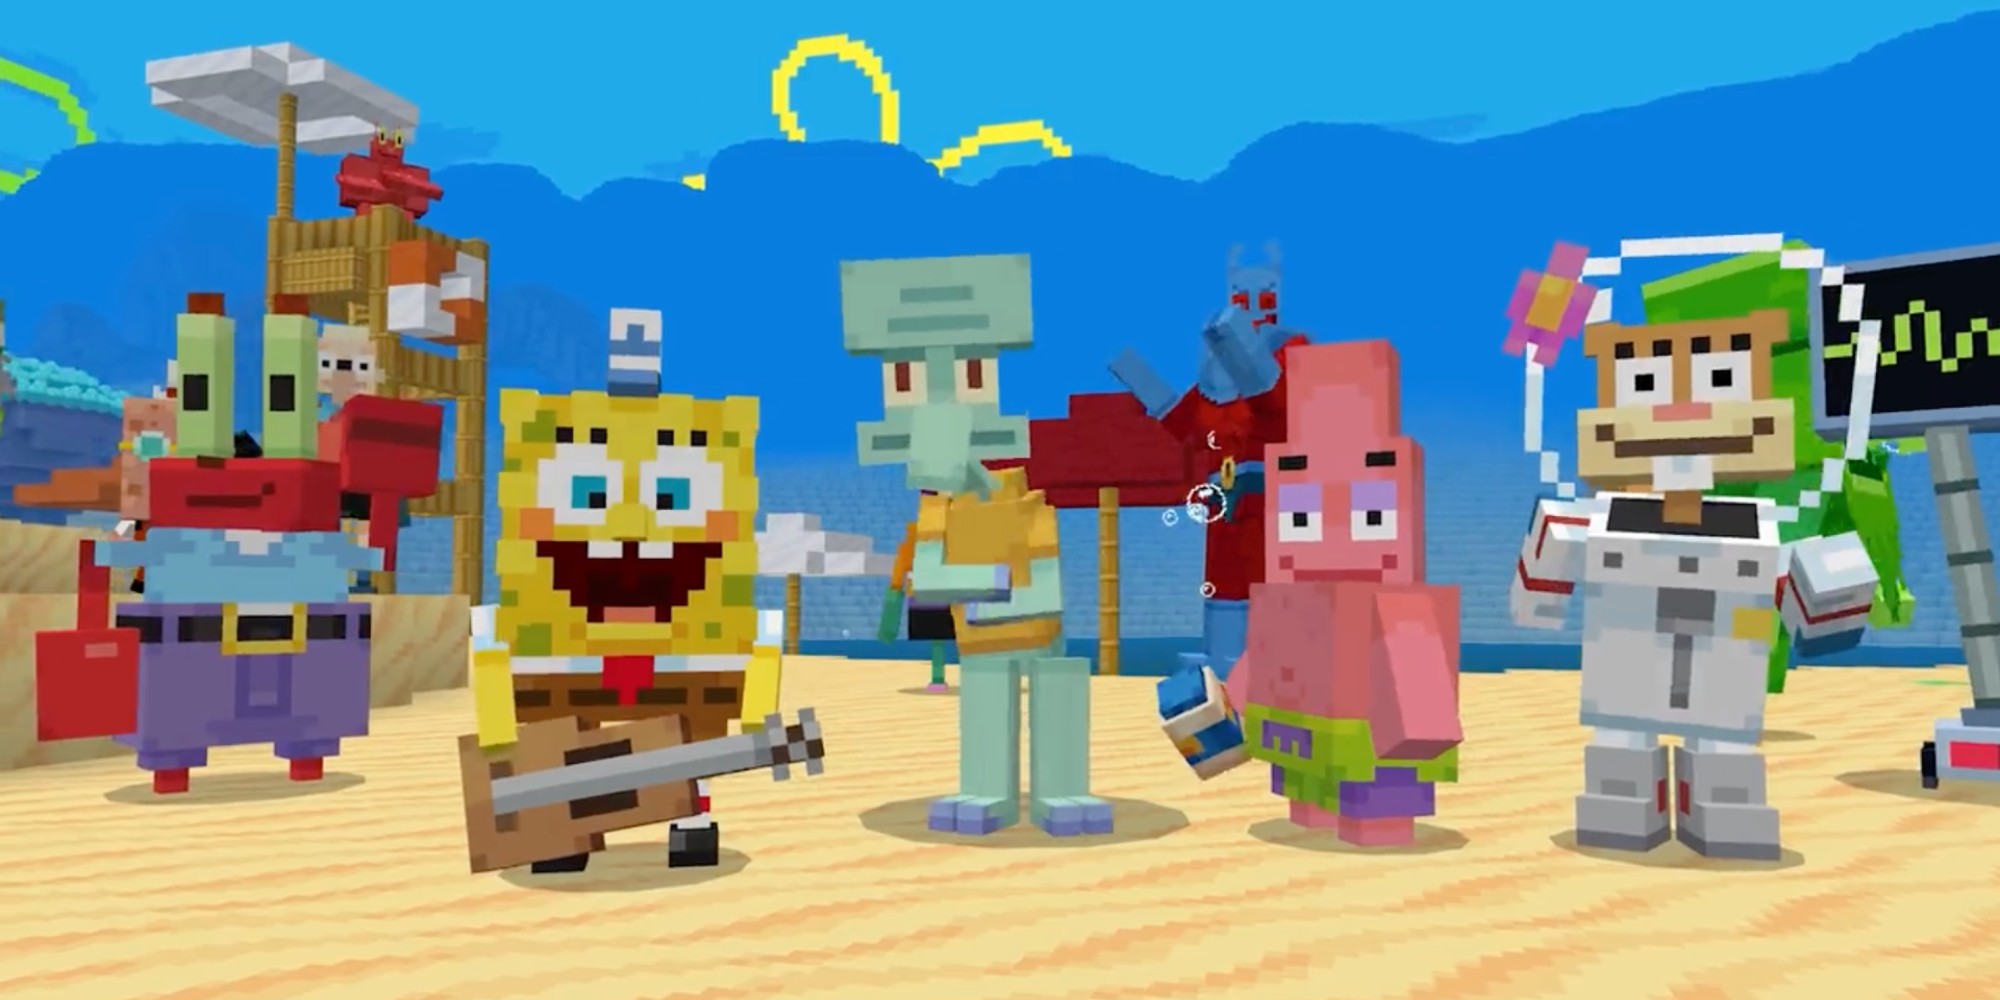 spongebob-squarepants-makes-a-splash-in-minecraft-today-digital-trends